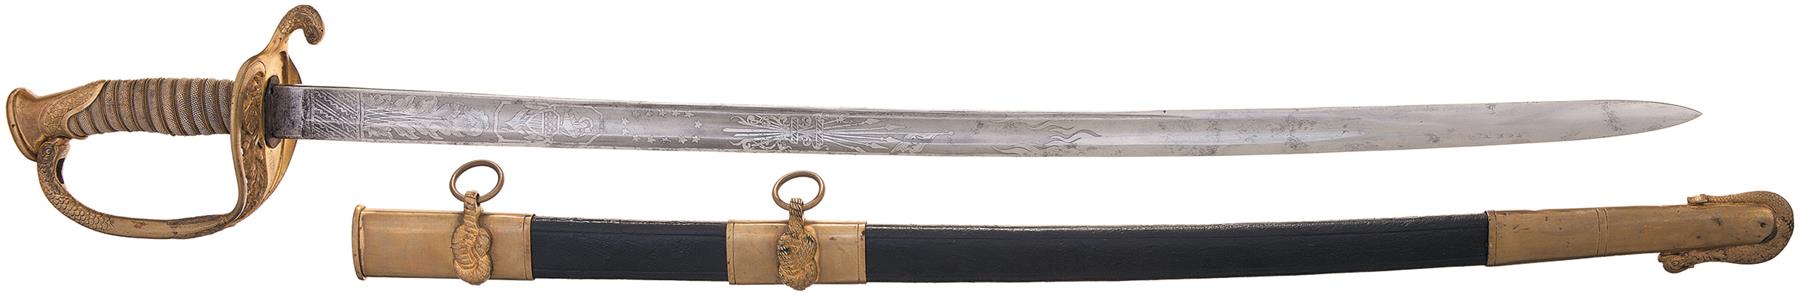 civil war presentation navy swords